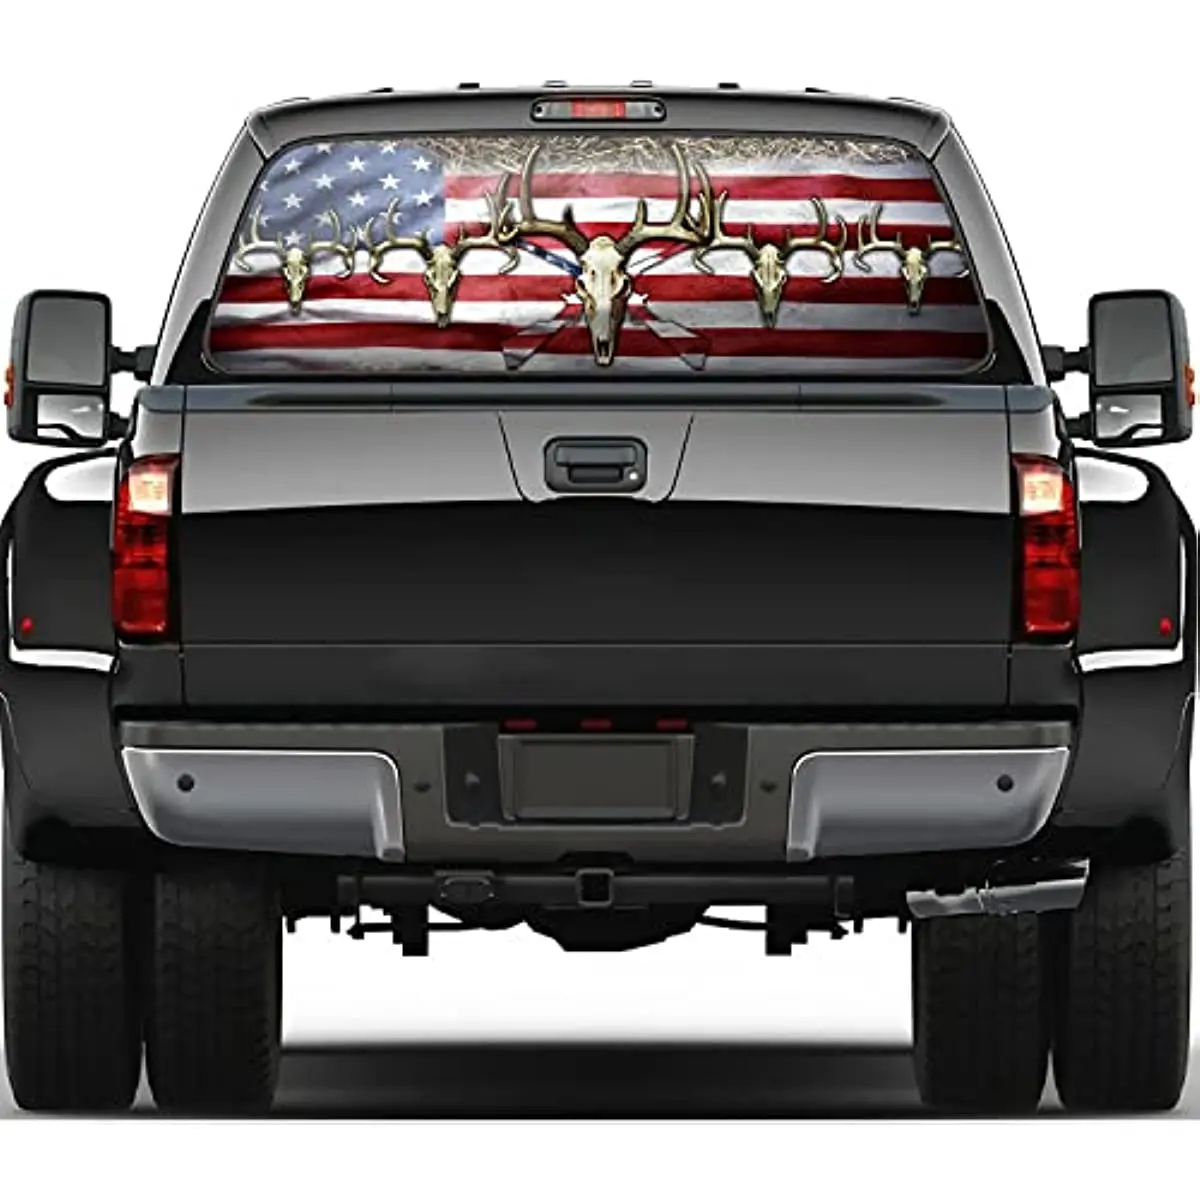 

Hsdiokl American Flag Truck Rear Window Decals,Deer Truck Stickers,Graphic Perforated Vinyl Trucks, SUV, Cars, Universal,66''x20